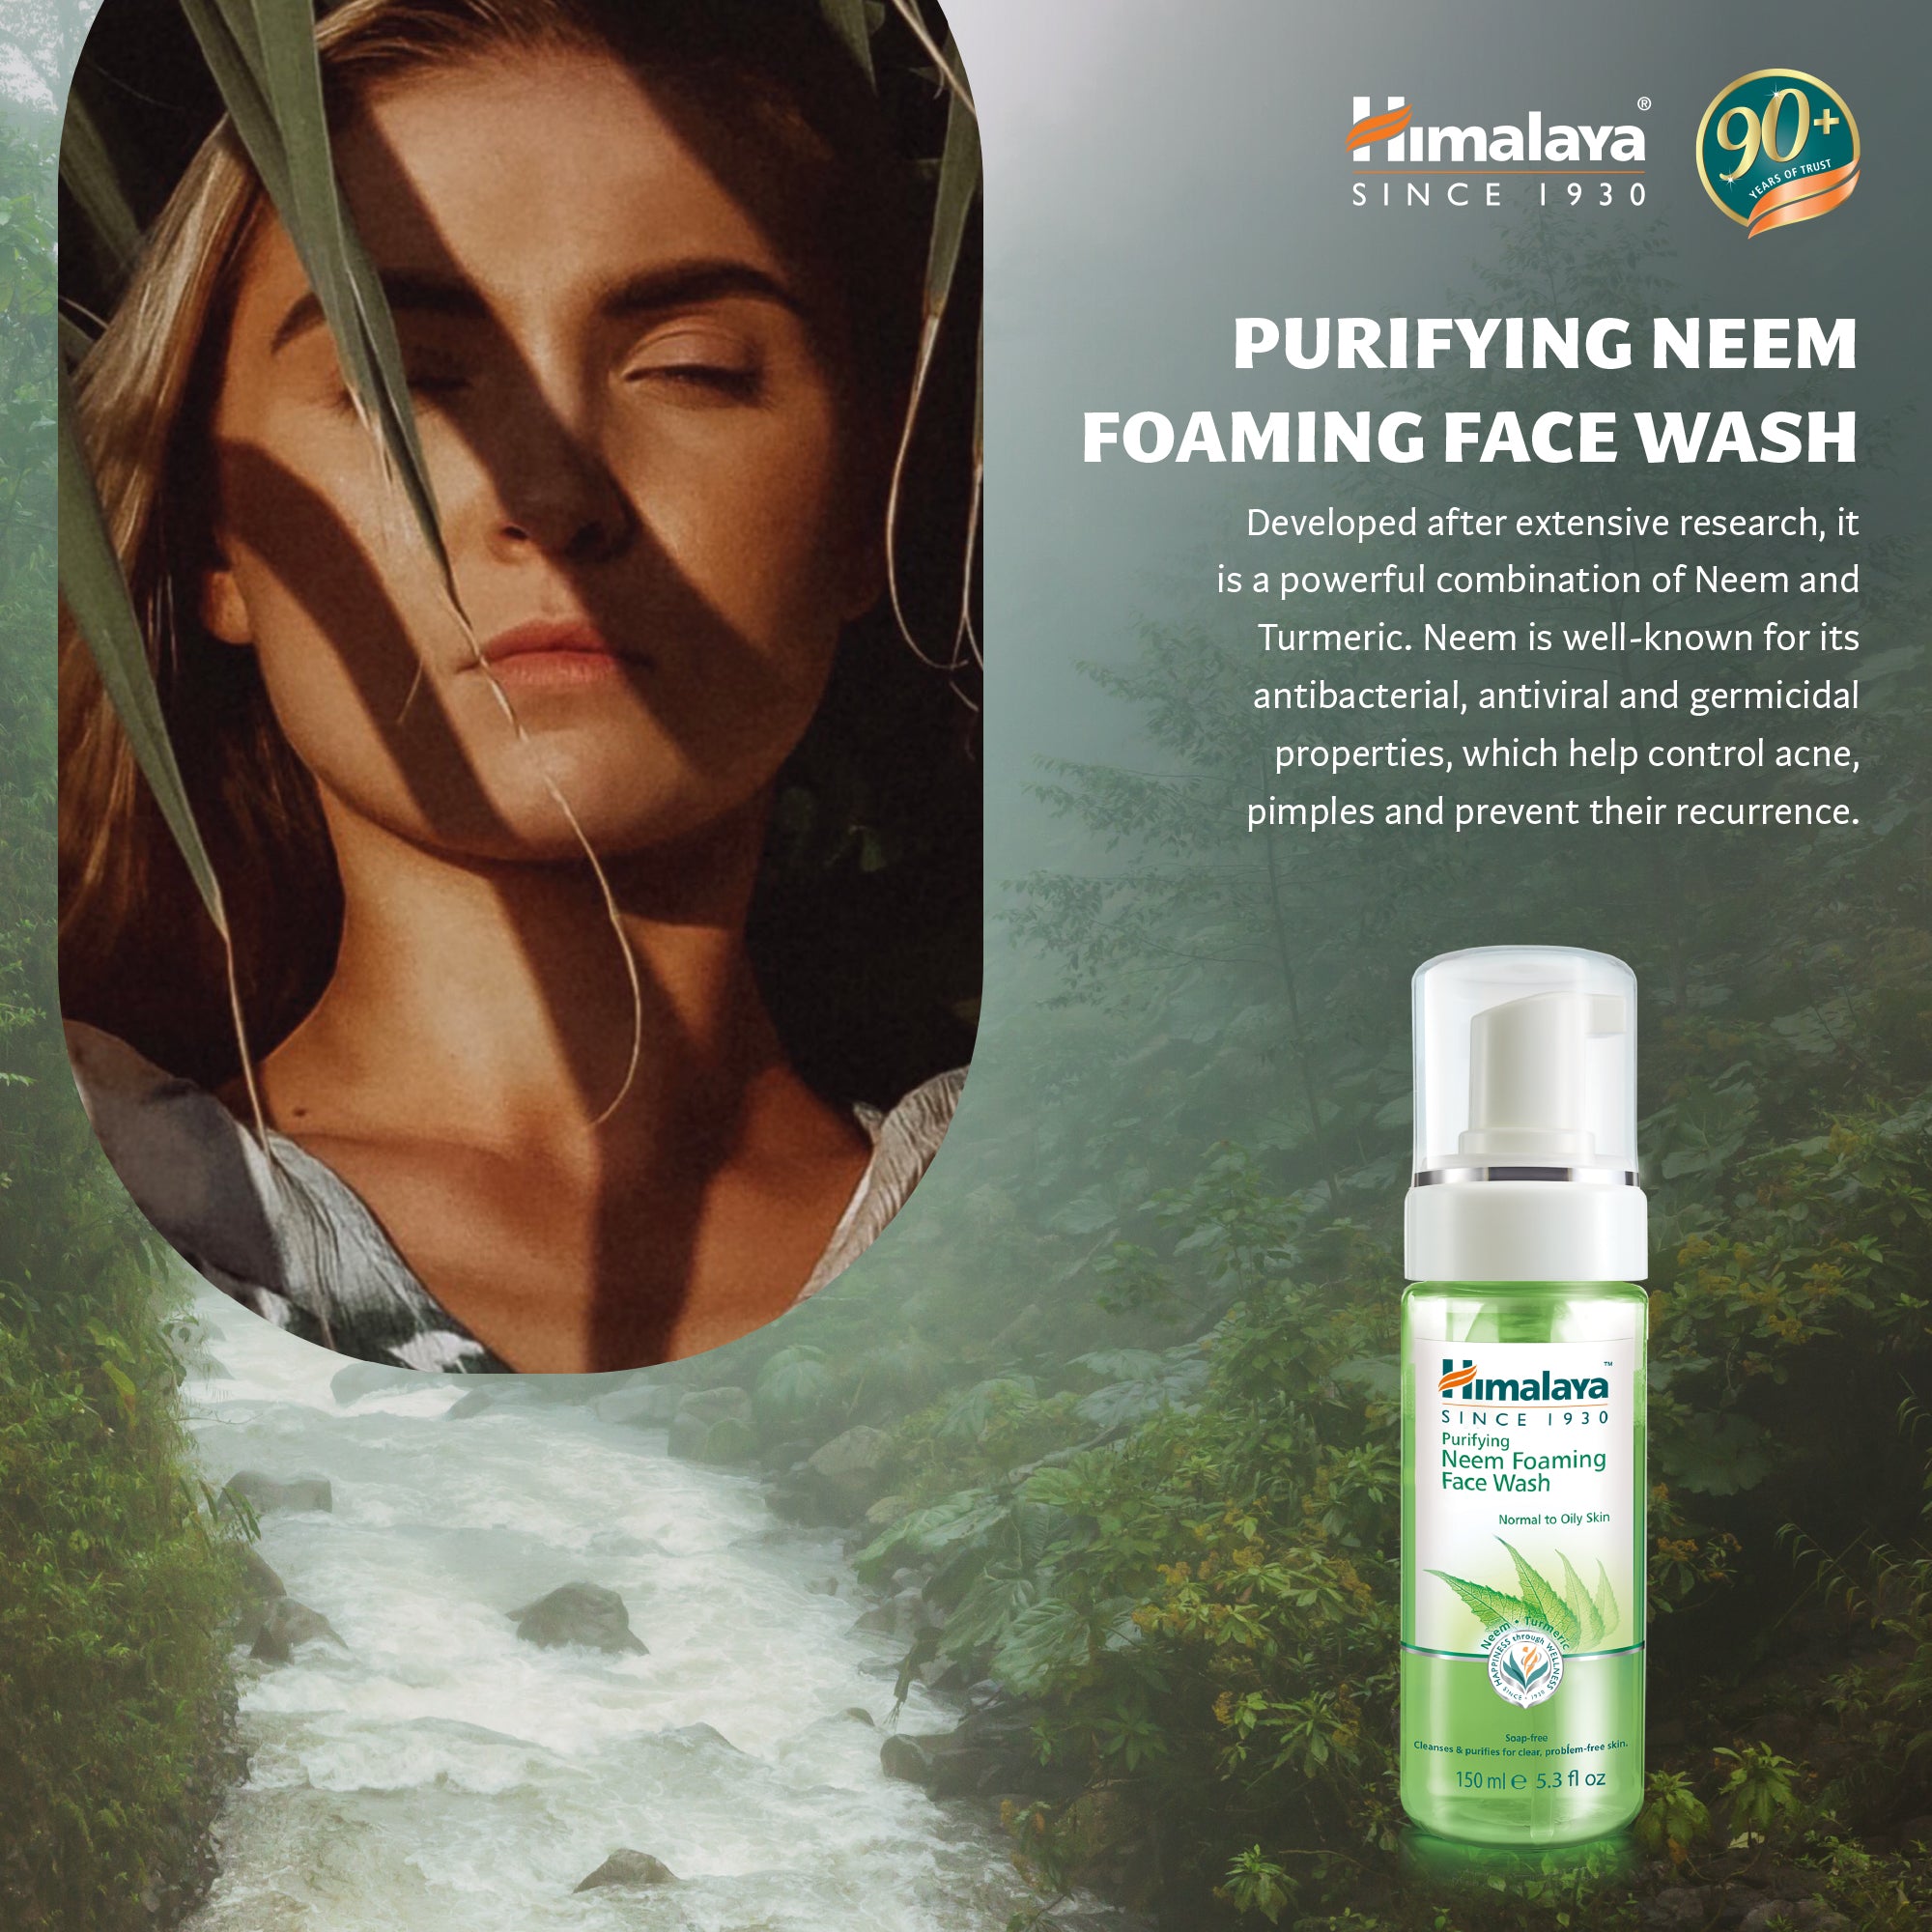 Himalaya Purifying Neem Foaming Face Wash - 150ml (Pack of 3)